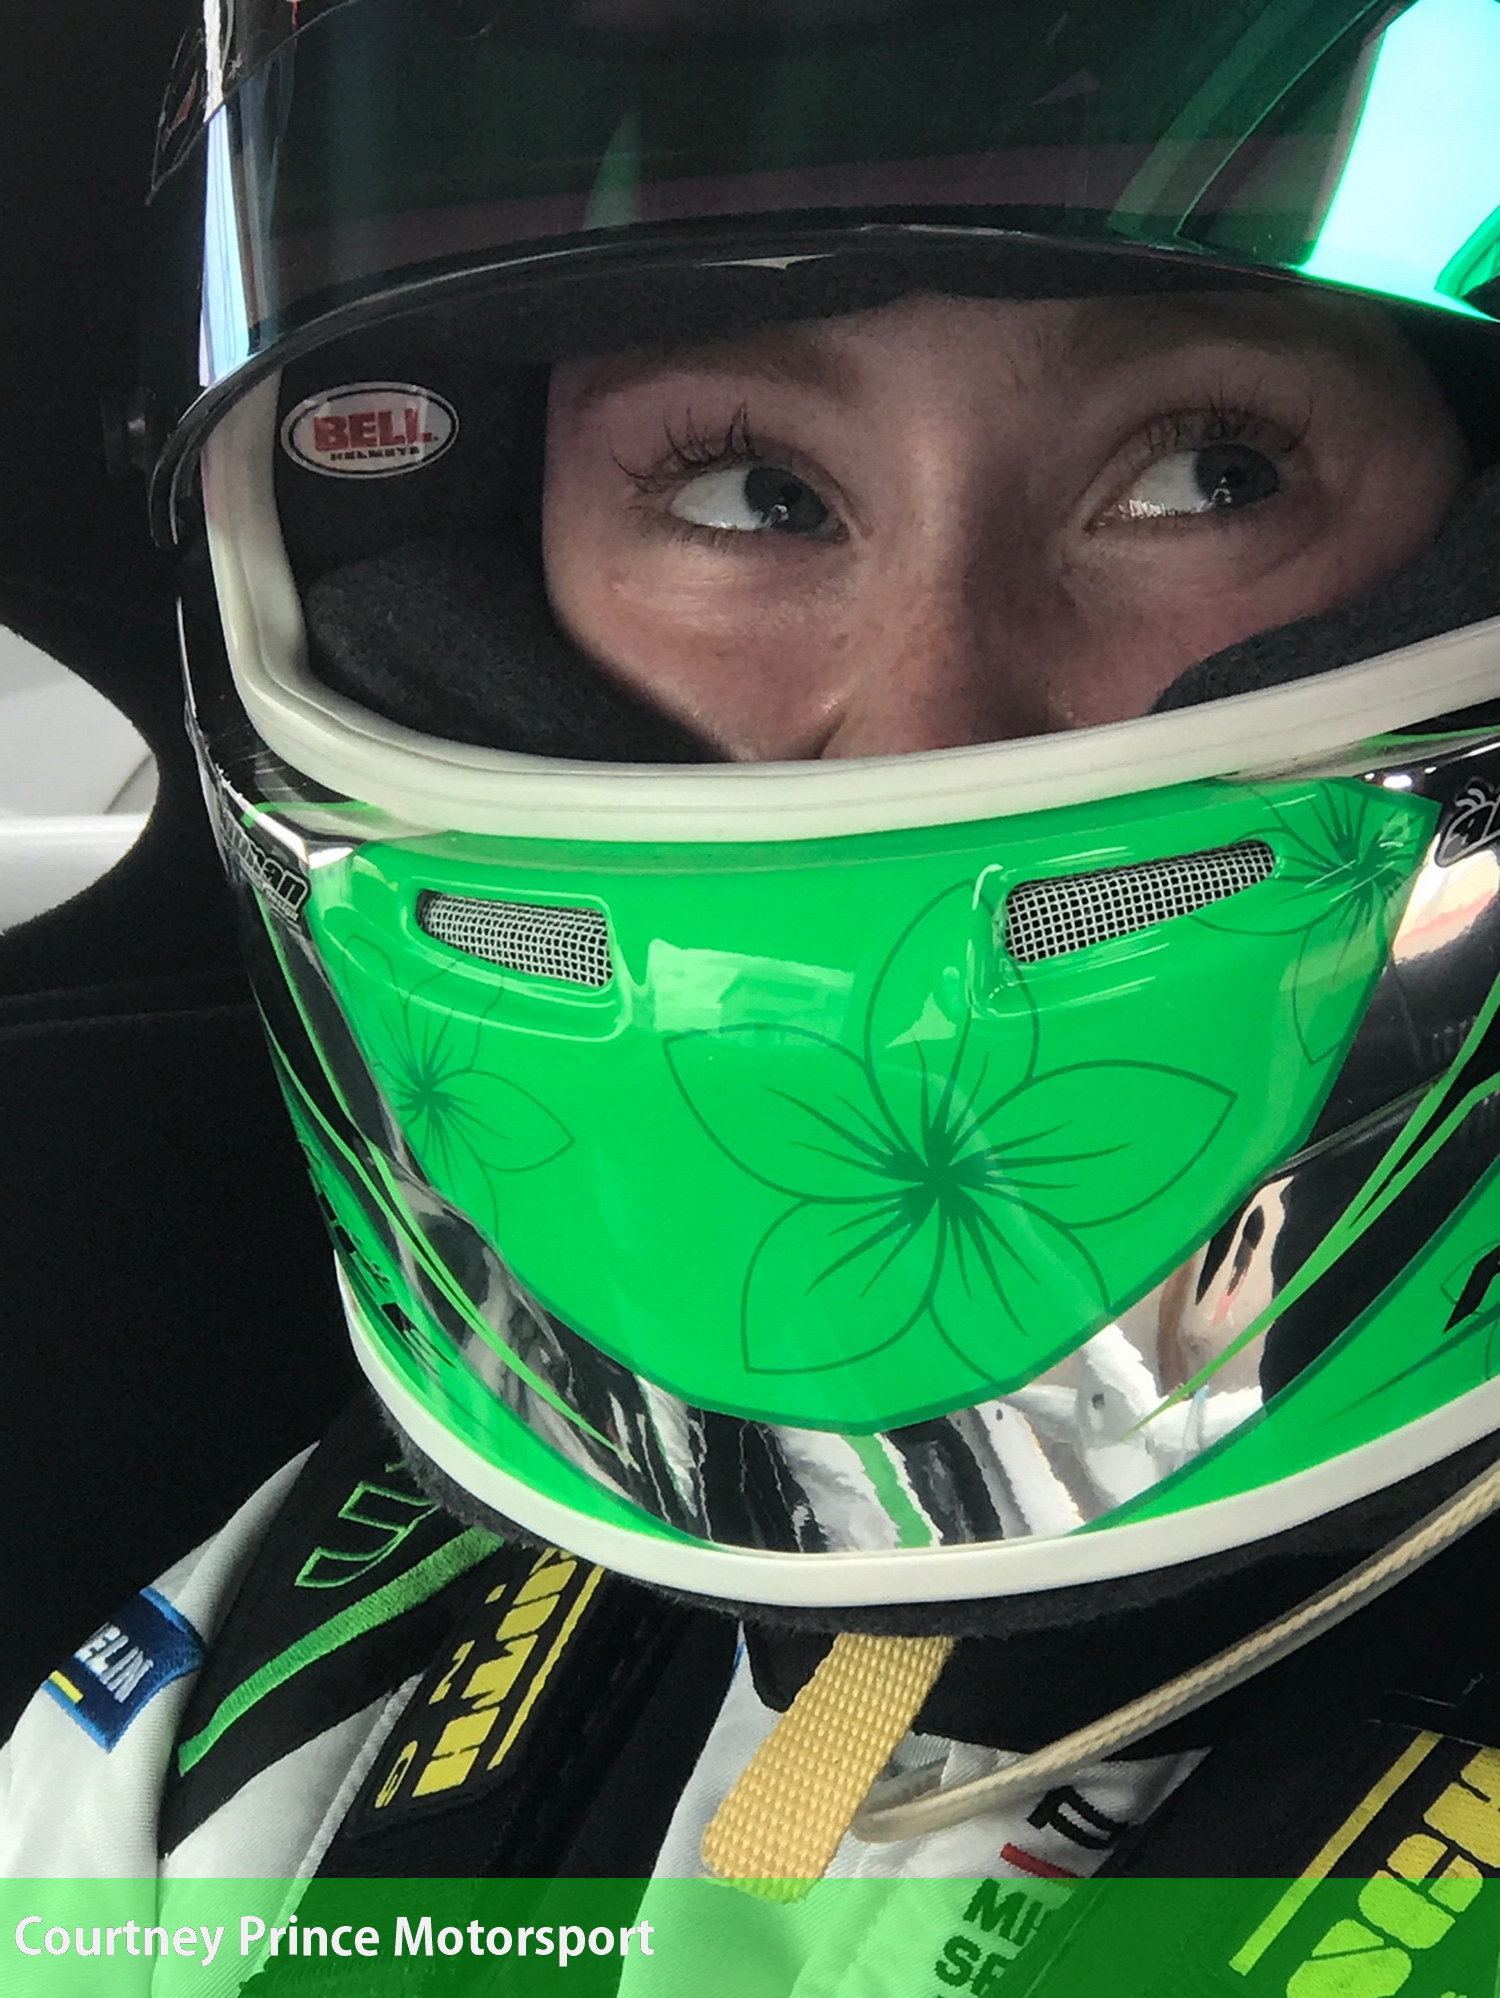 Courtney wearing her new helmet. Courtney Prince Motorsport, 2020.